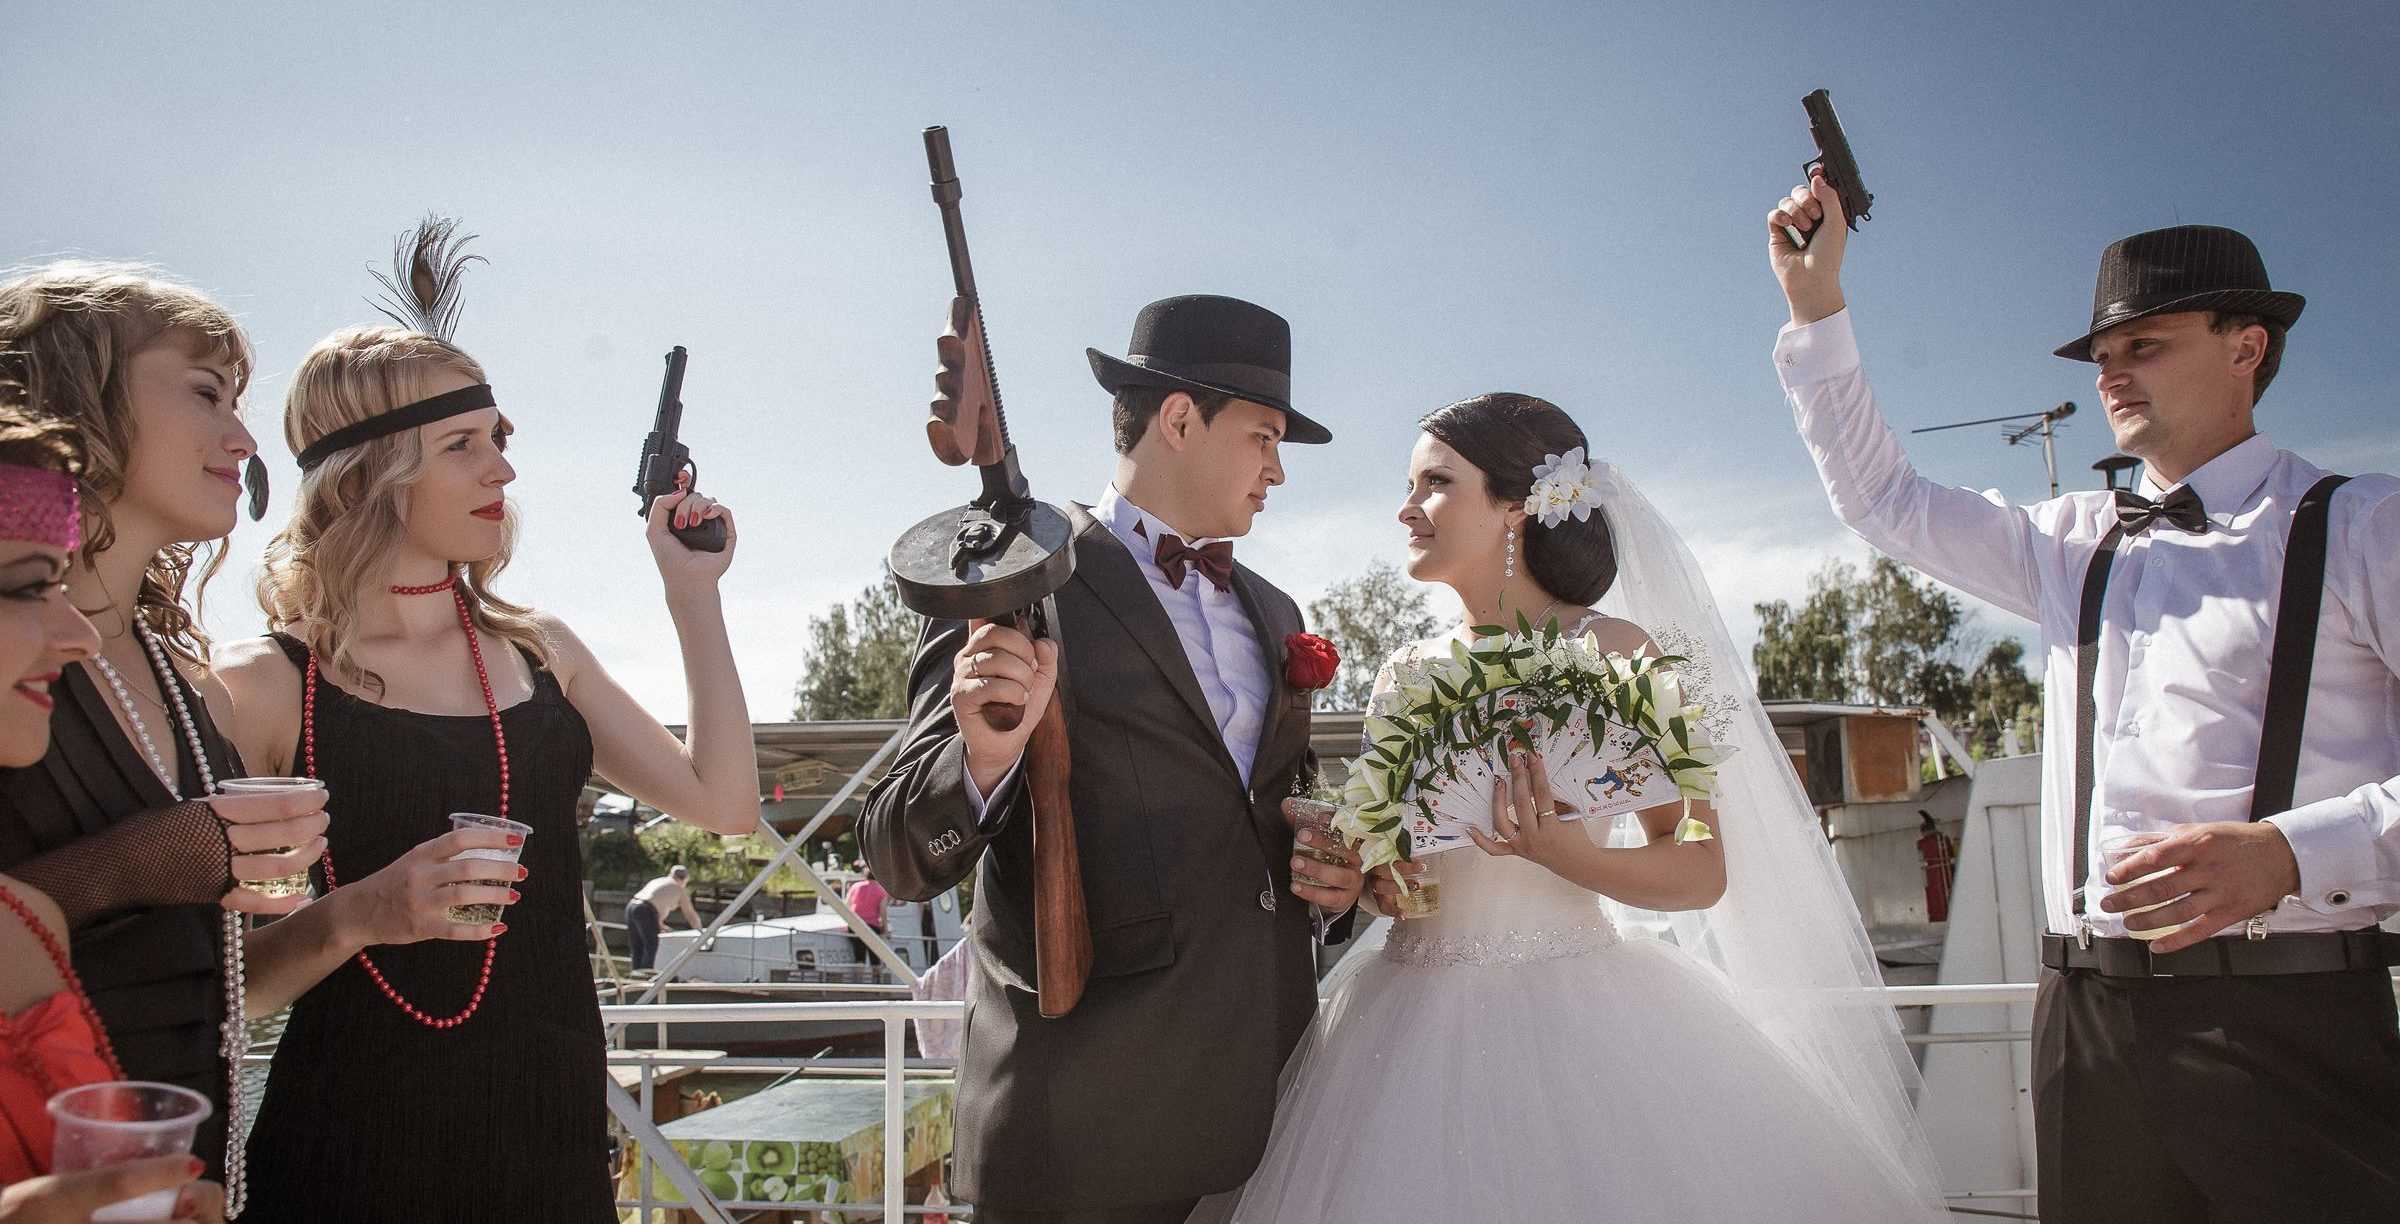 Готическая свадьба: идеи оформления и образ молодоженов фото и видео